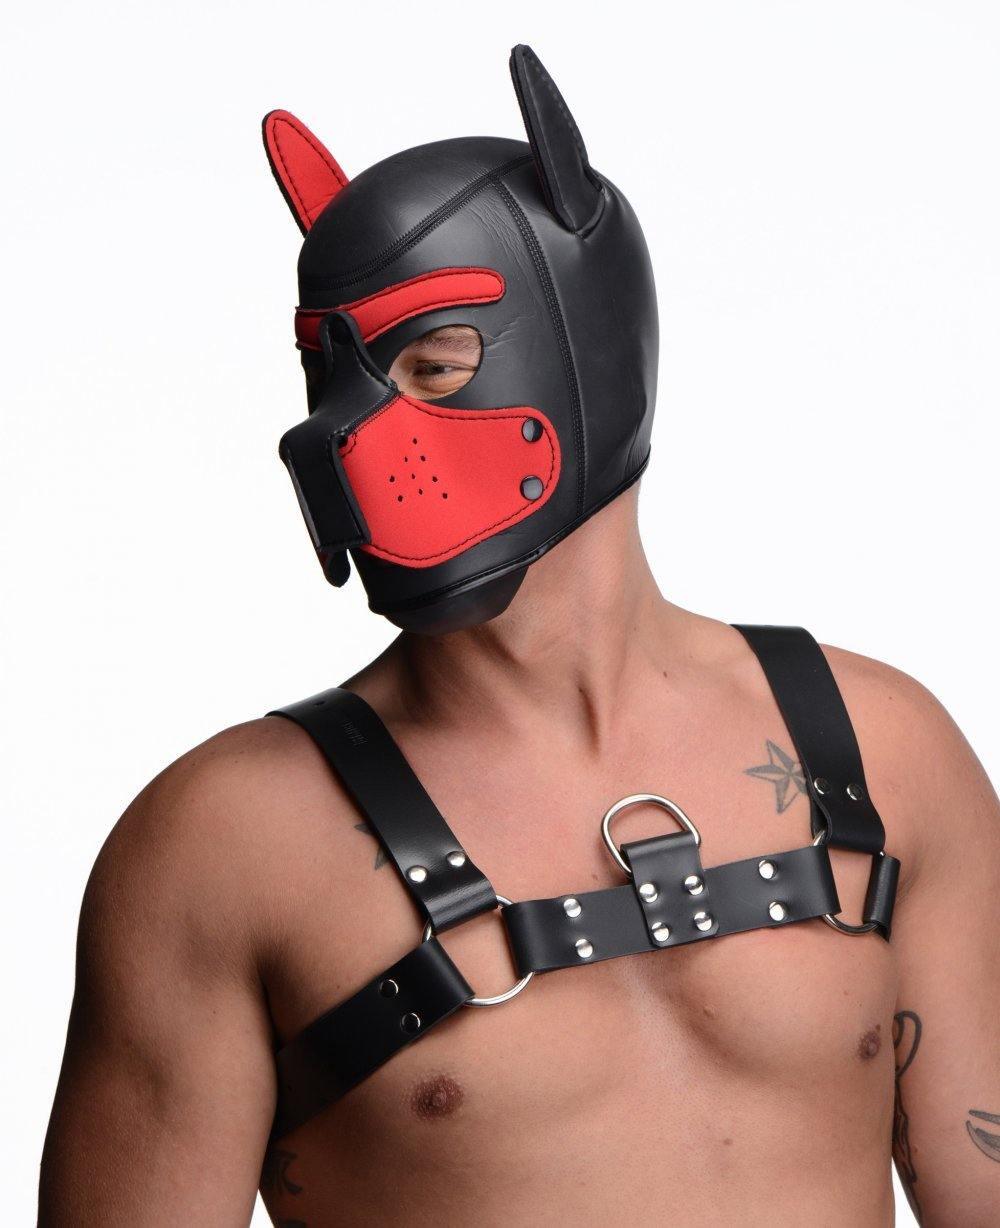 Spike Neoprene Puppy Play Hood - Red - My Sex Toy Hub